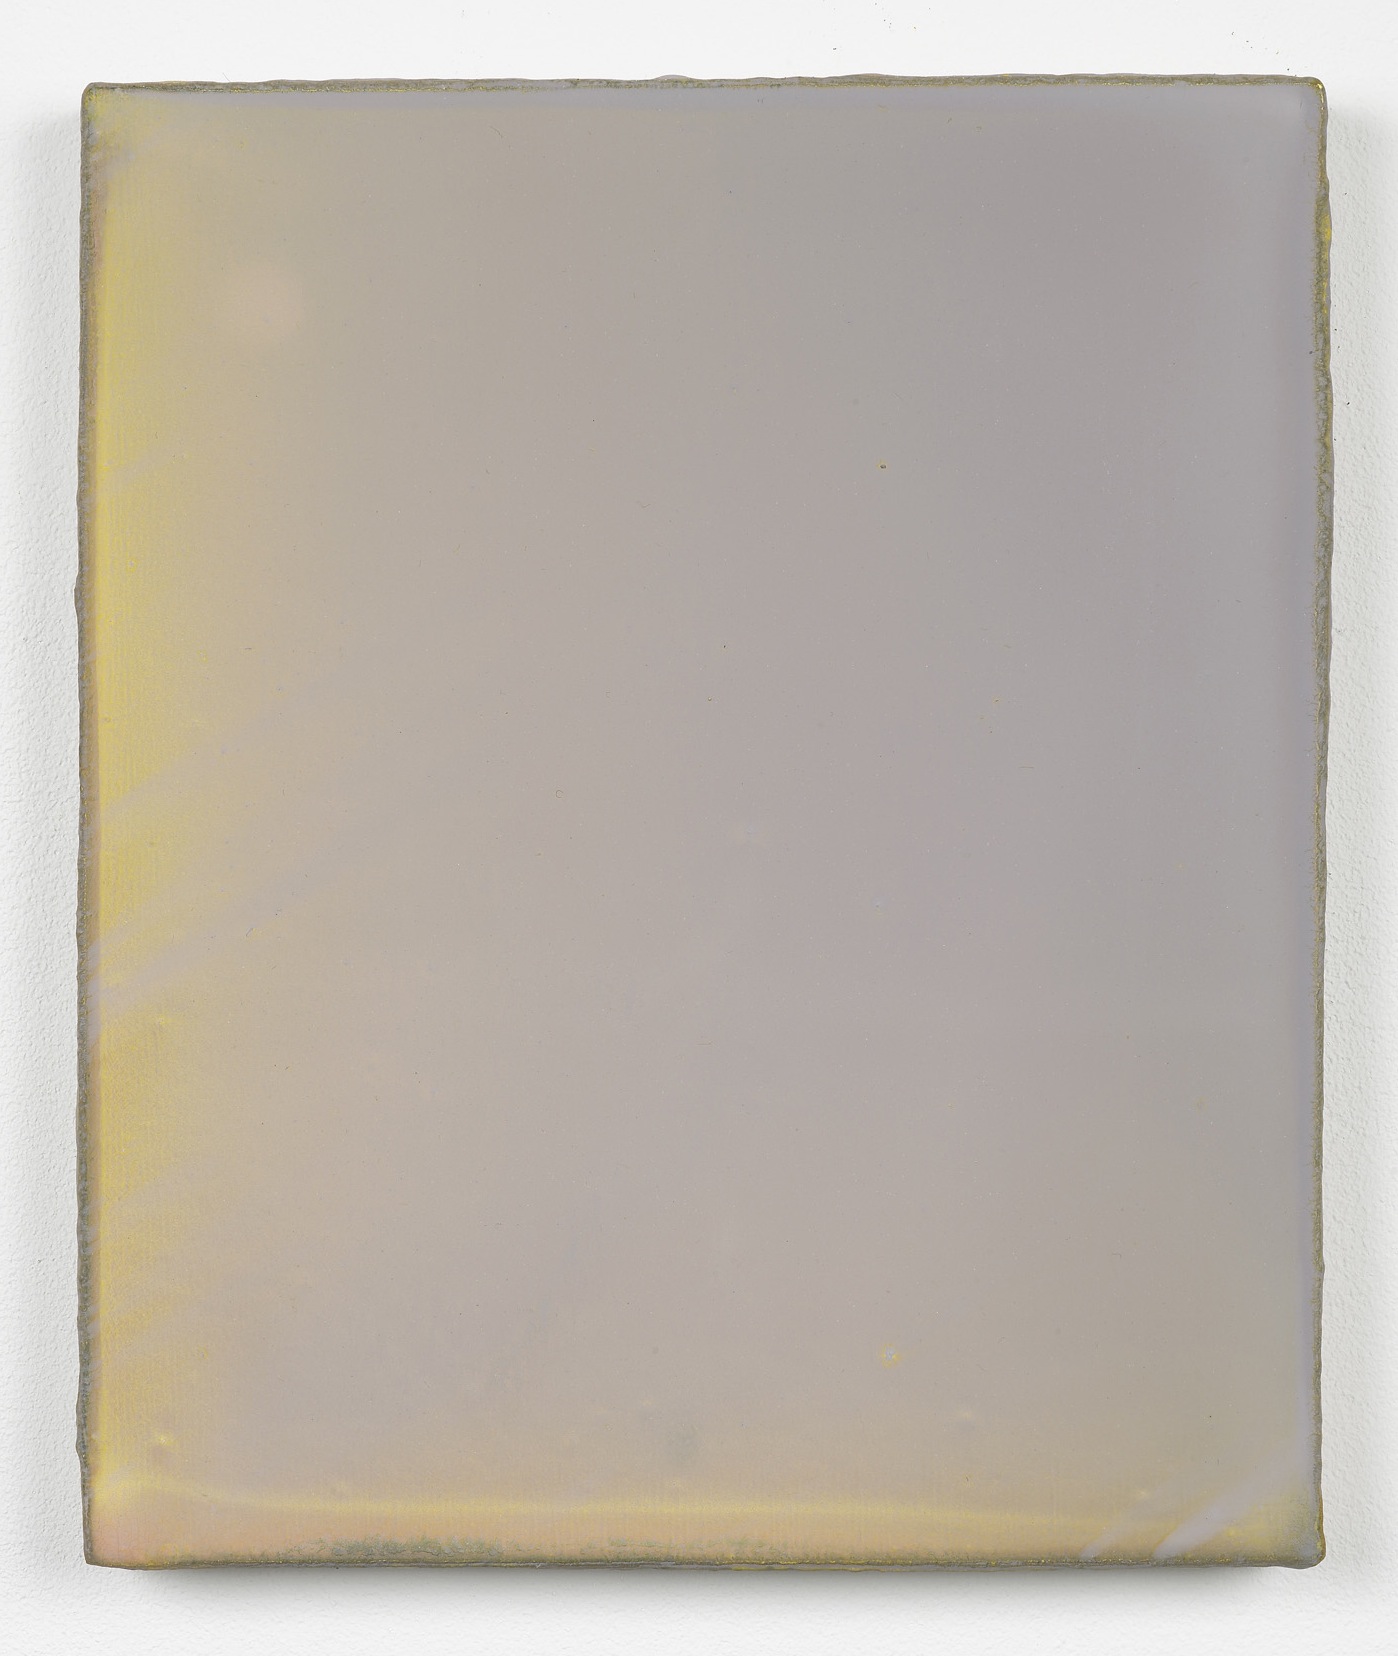      Untitled   2012   Oil on gesso board   30 x 25 cm / 11.8 x 9.8 in  